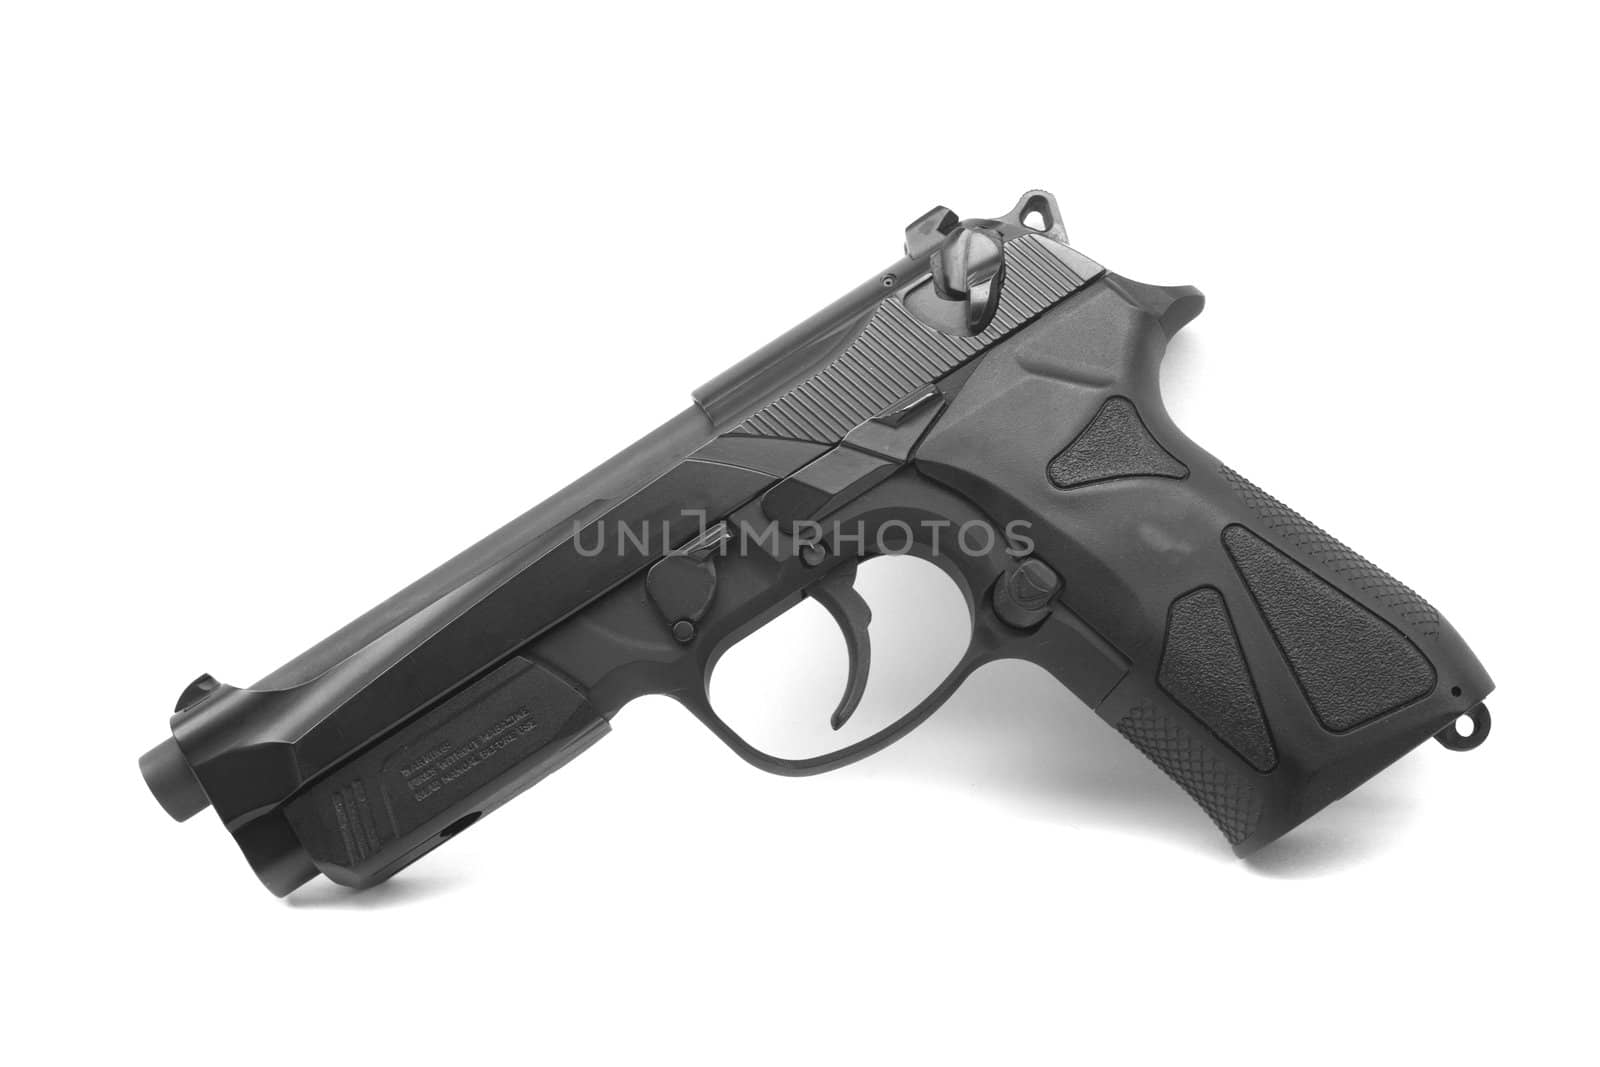 Handgun isolated on a white background